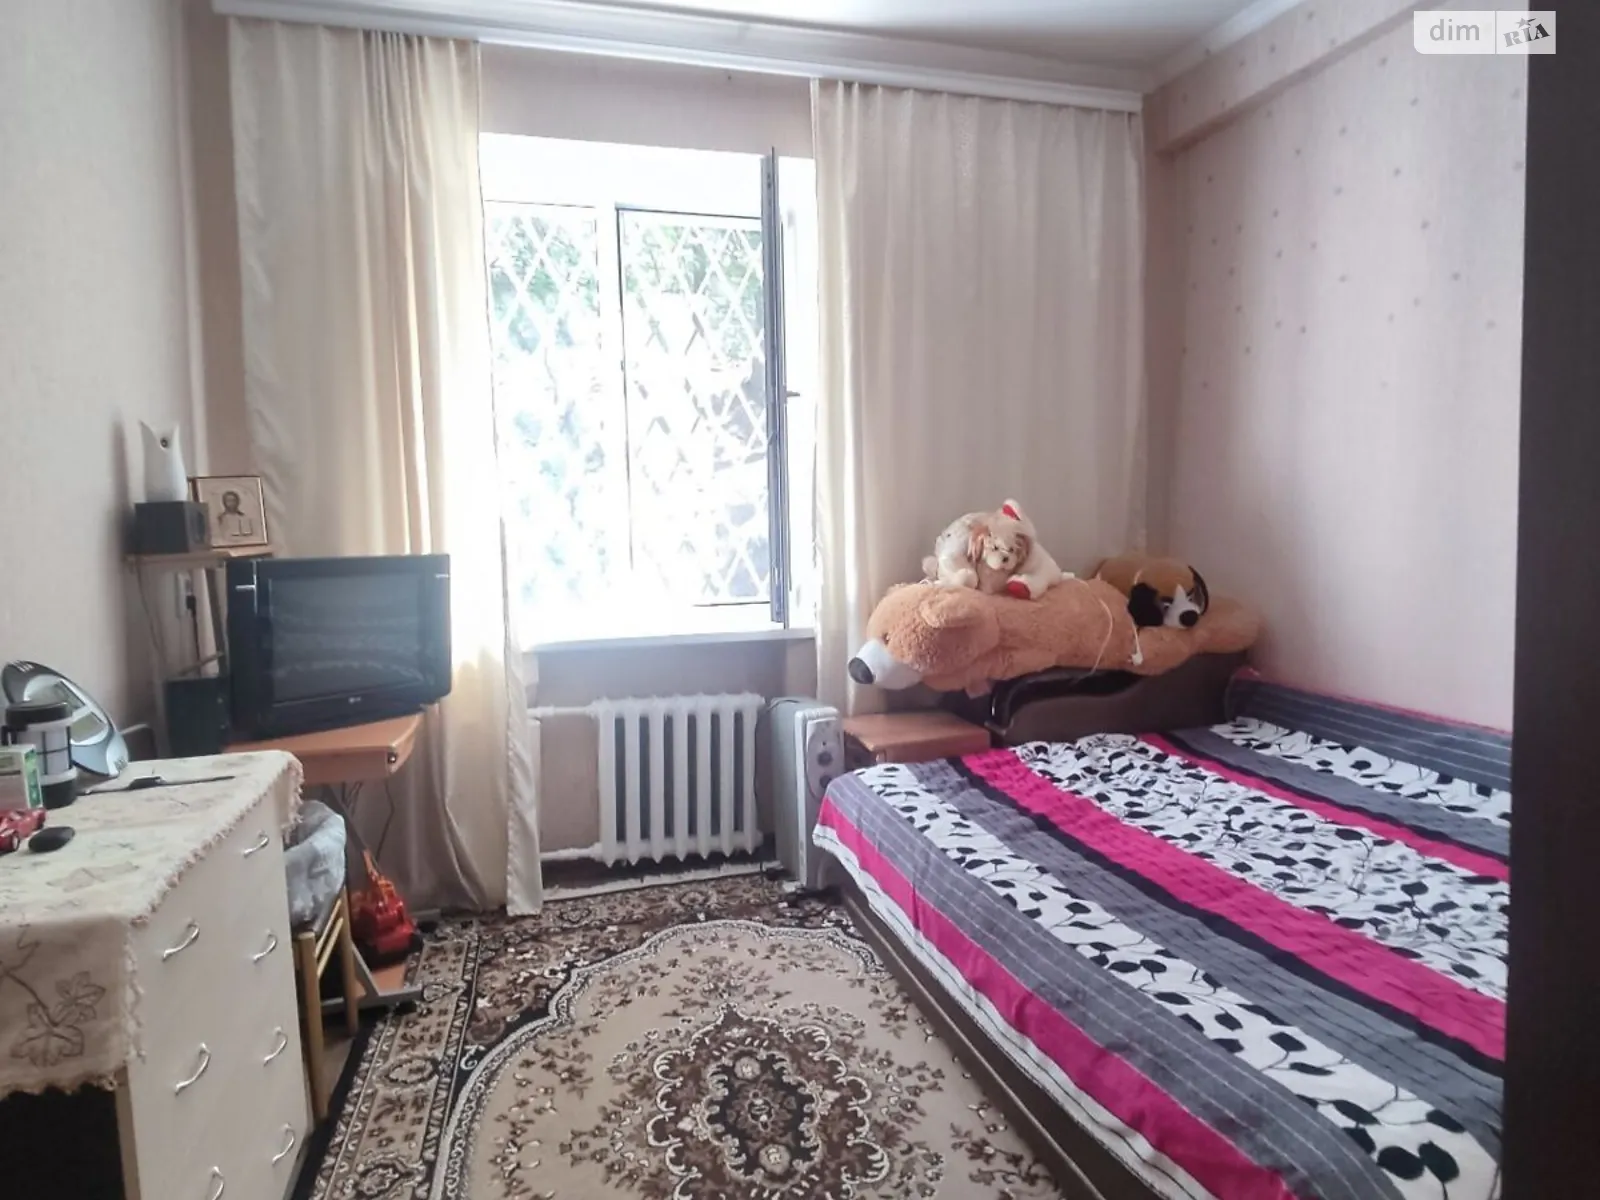 Продается комната 25 кв. м в Киеве, цена: 15500 $ - фото 1